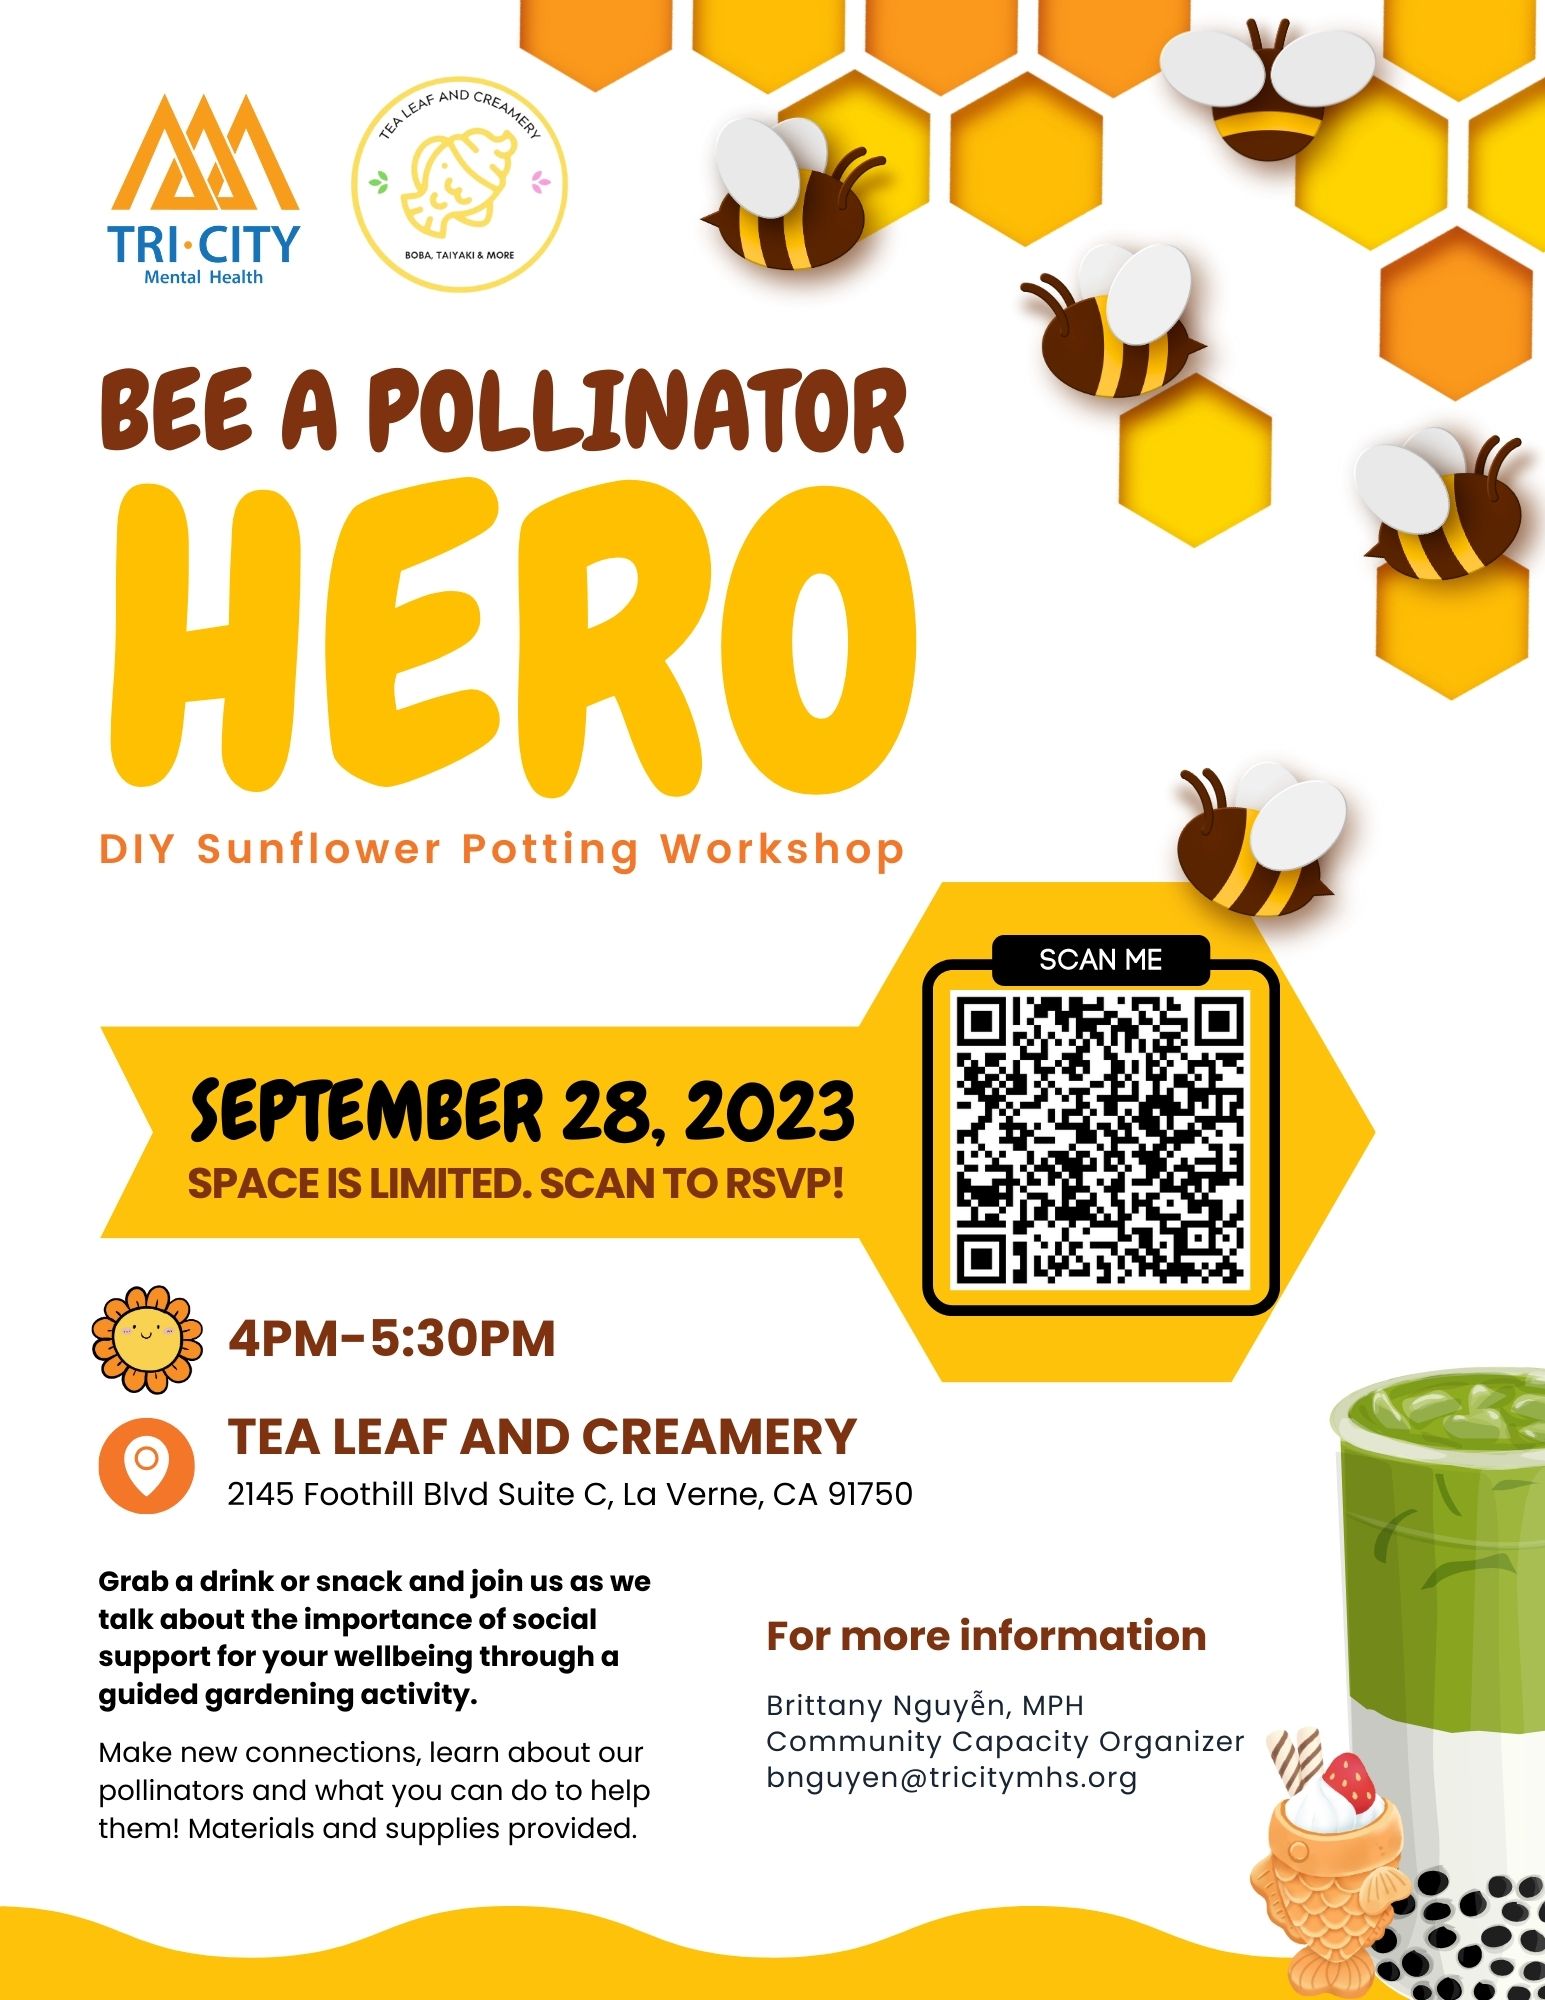 Bee a Pollinator Hero Garden Workshop at Tea Leaf and Creamery